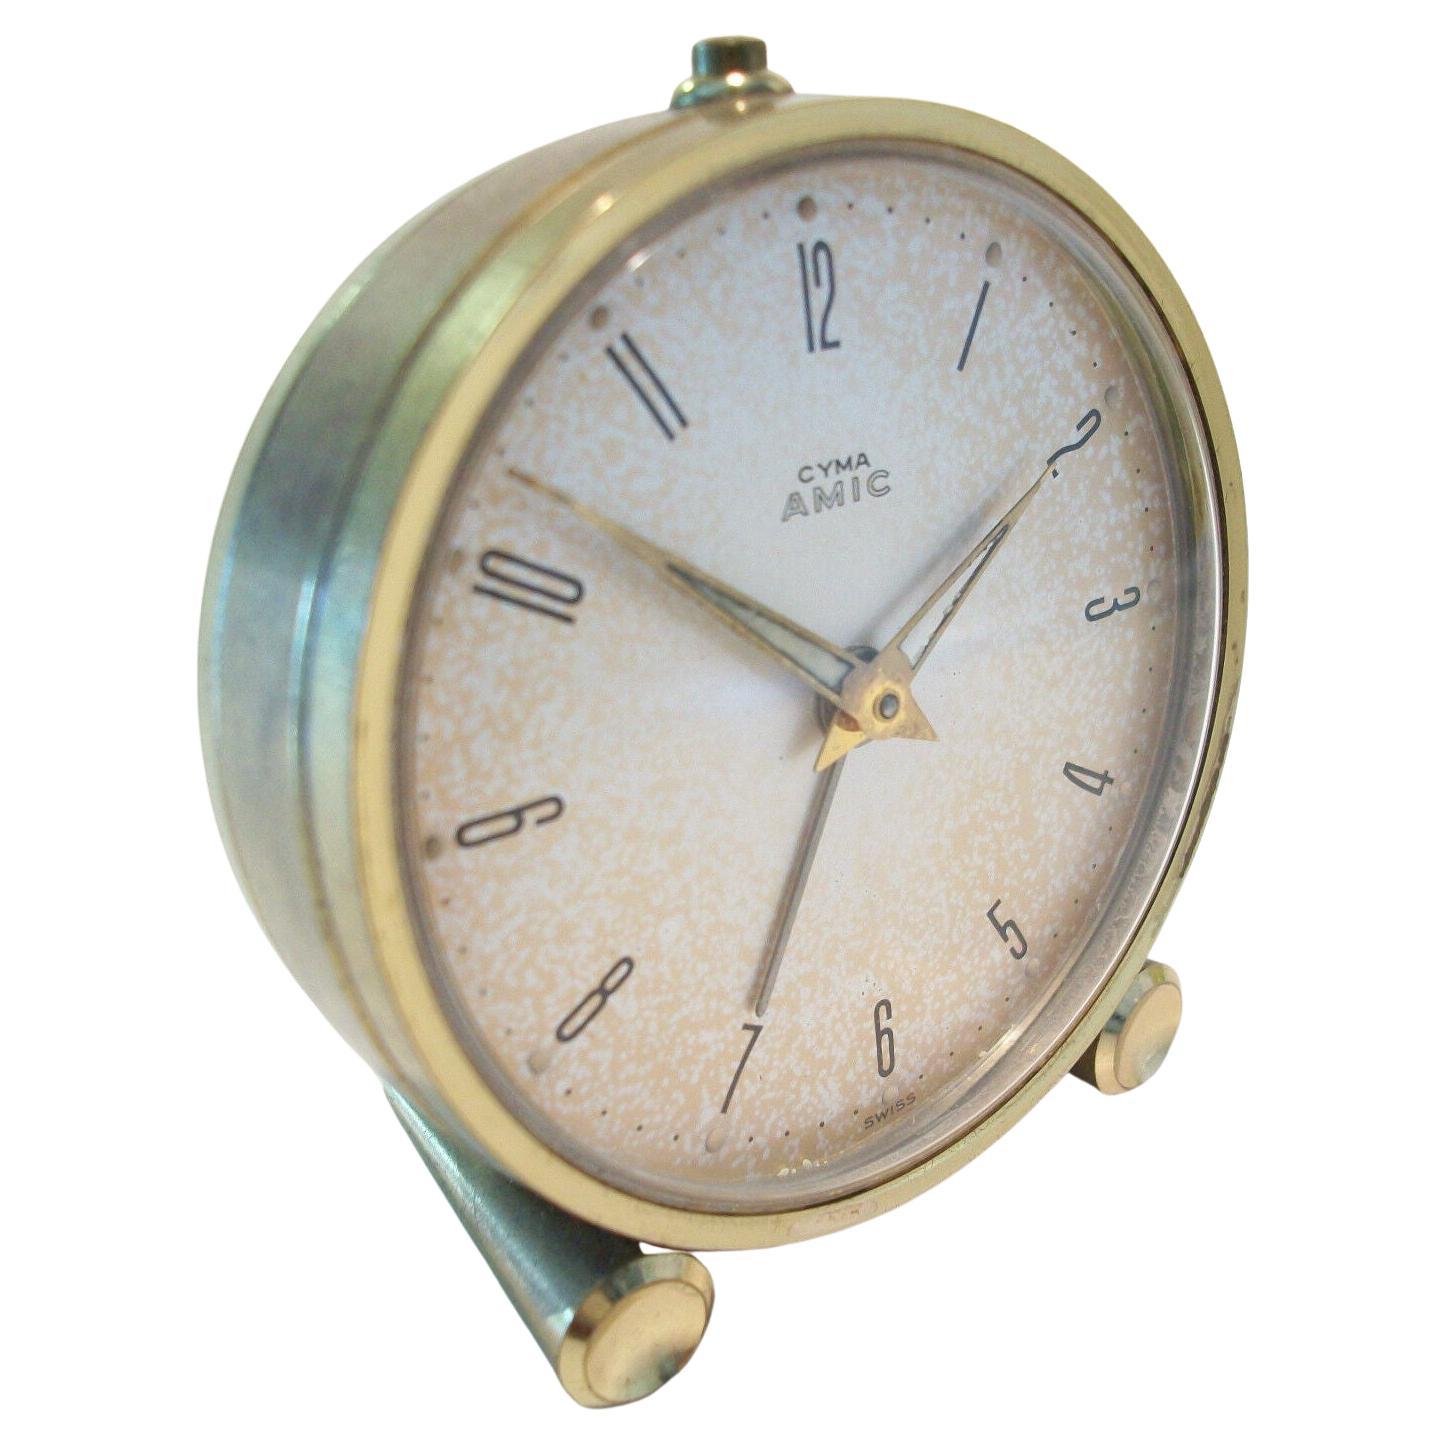 CYMA WATCH COMPANY - Vintage Alarm Clock - 11 Jewels - Swiss Made - Circa 1950's